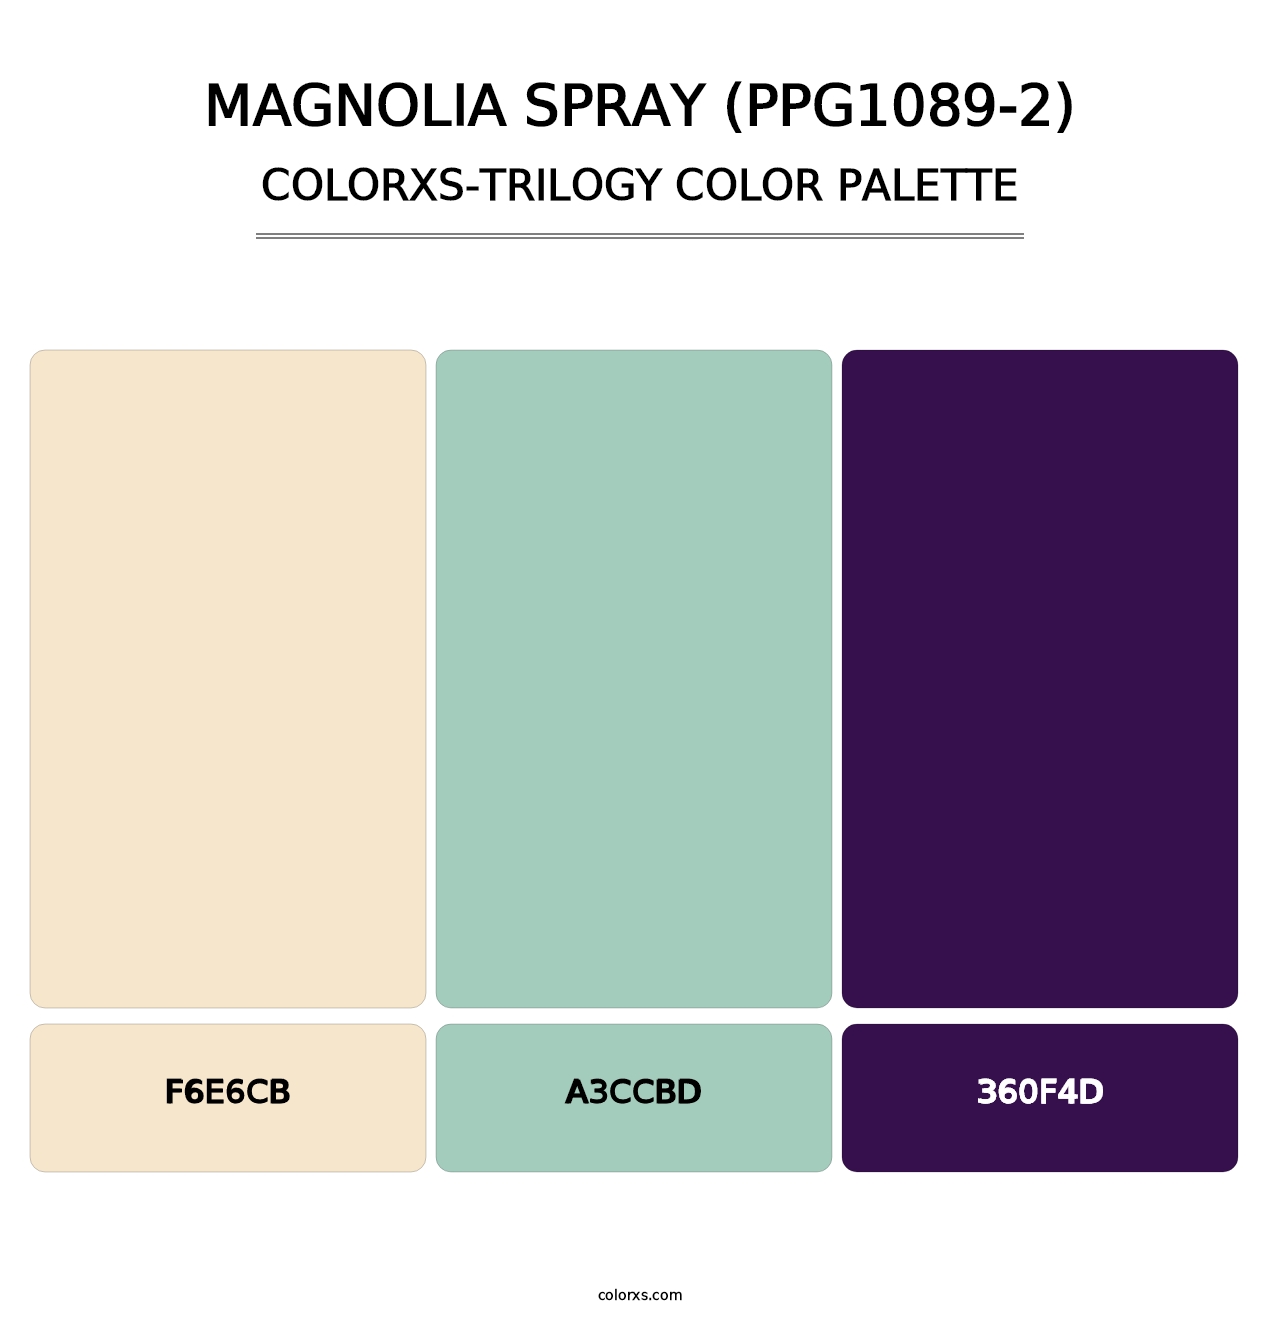 Magnolia Spray (PPG1089-2) - Colorxs Trilogy Palette